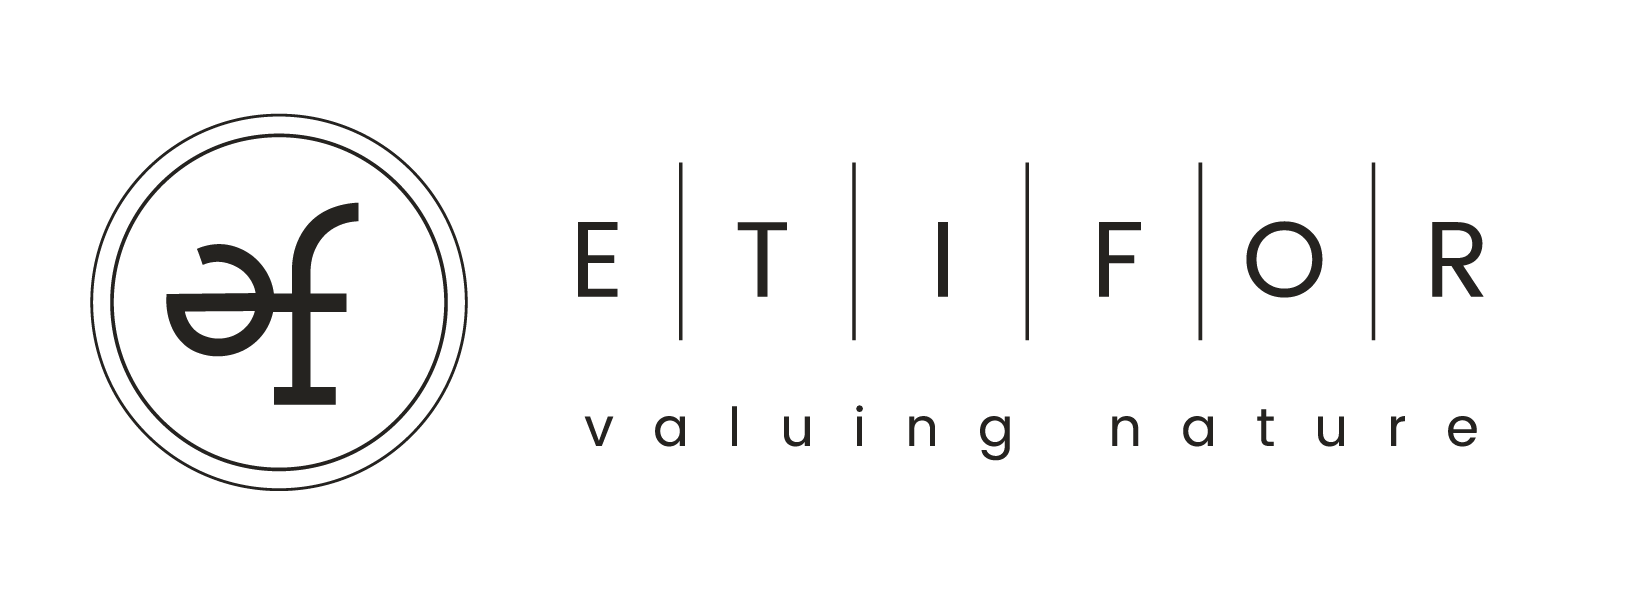 LIFEClimatePositive_logo-partner-etifor